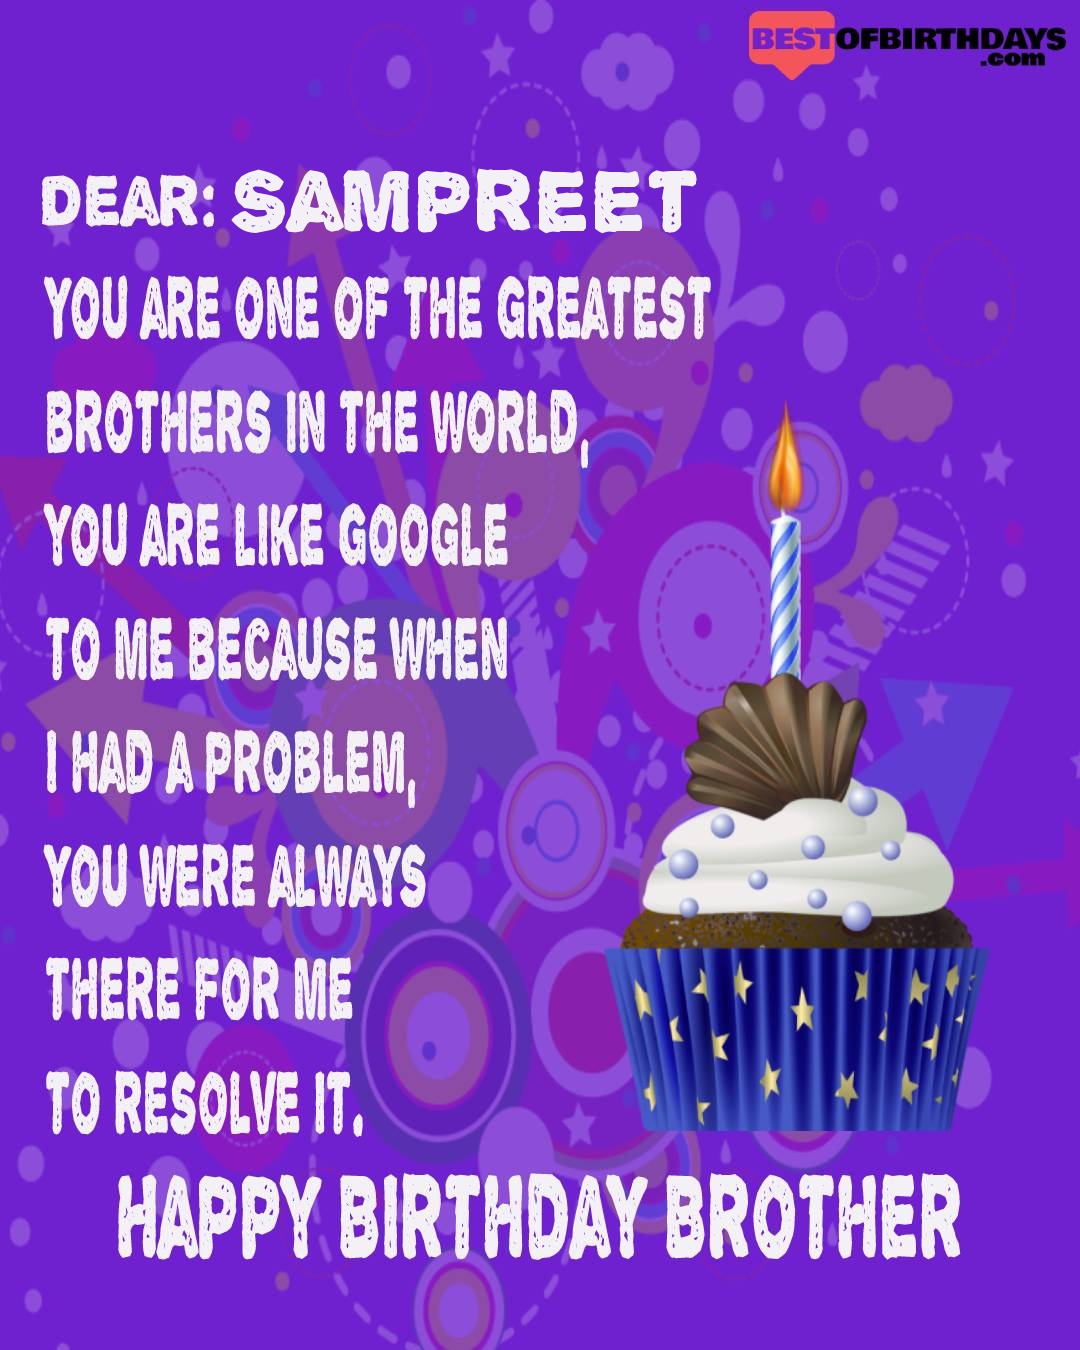 Happy birthday sampreet bhai brother bro